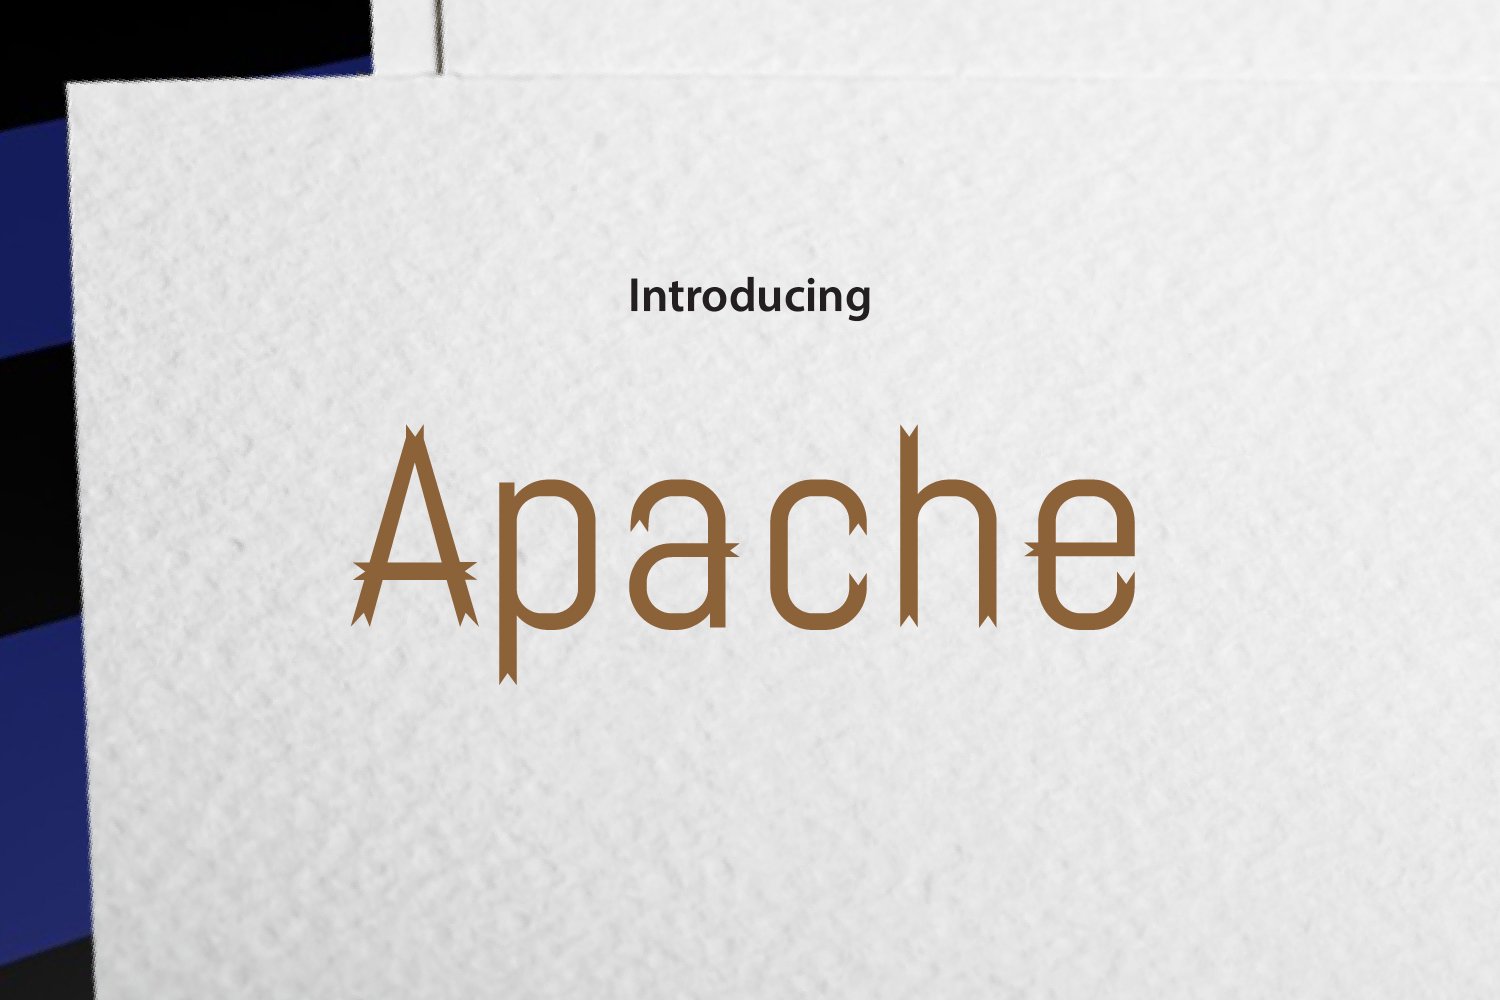 Apache cover image.